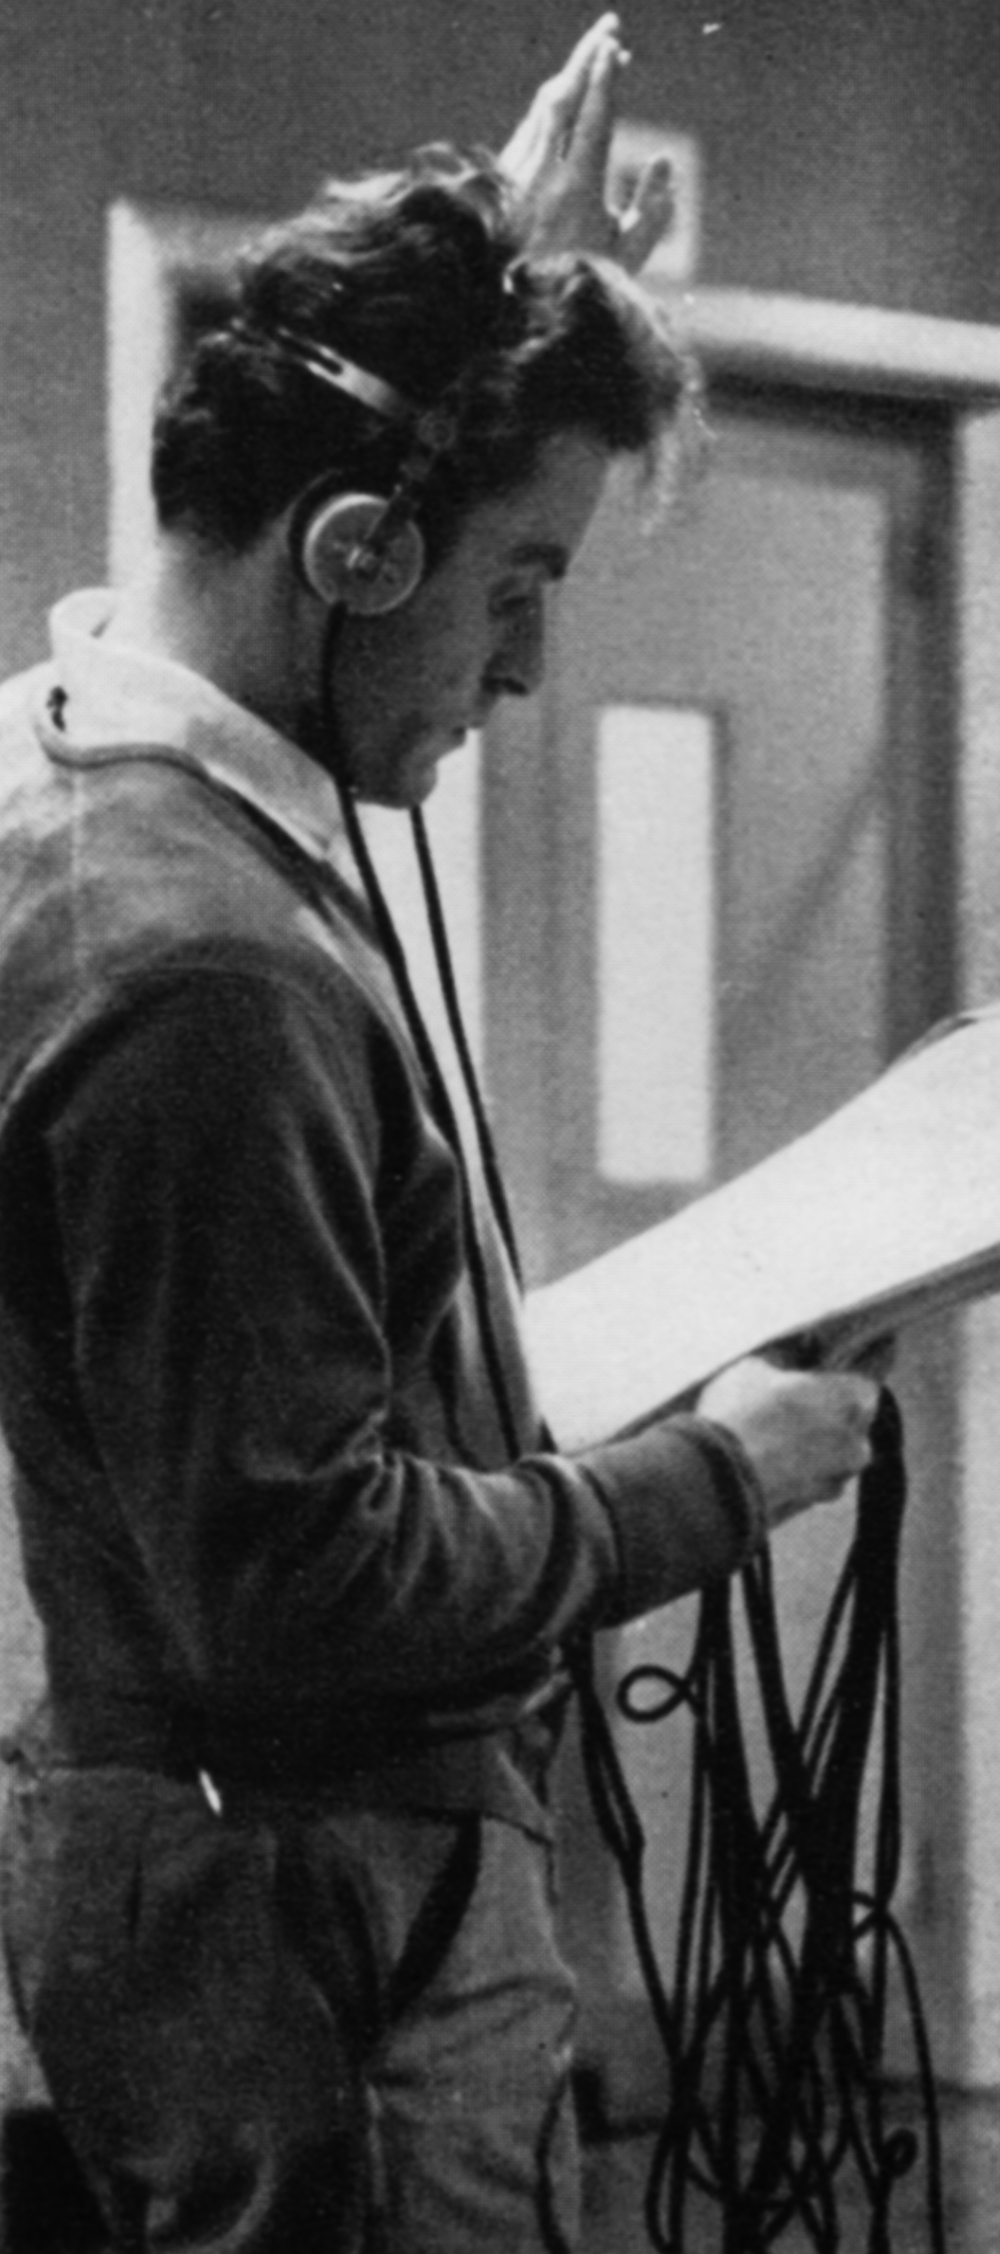 Floor manager in headphones holding a script